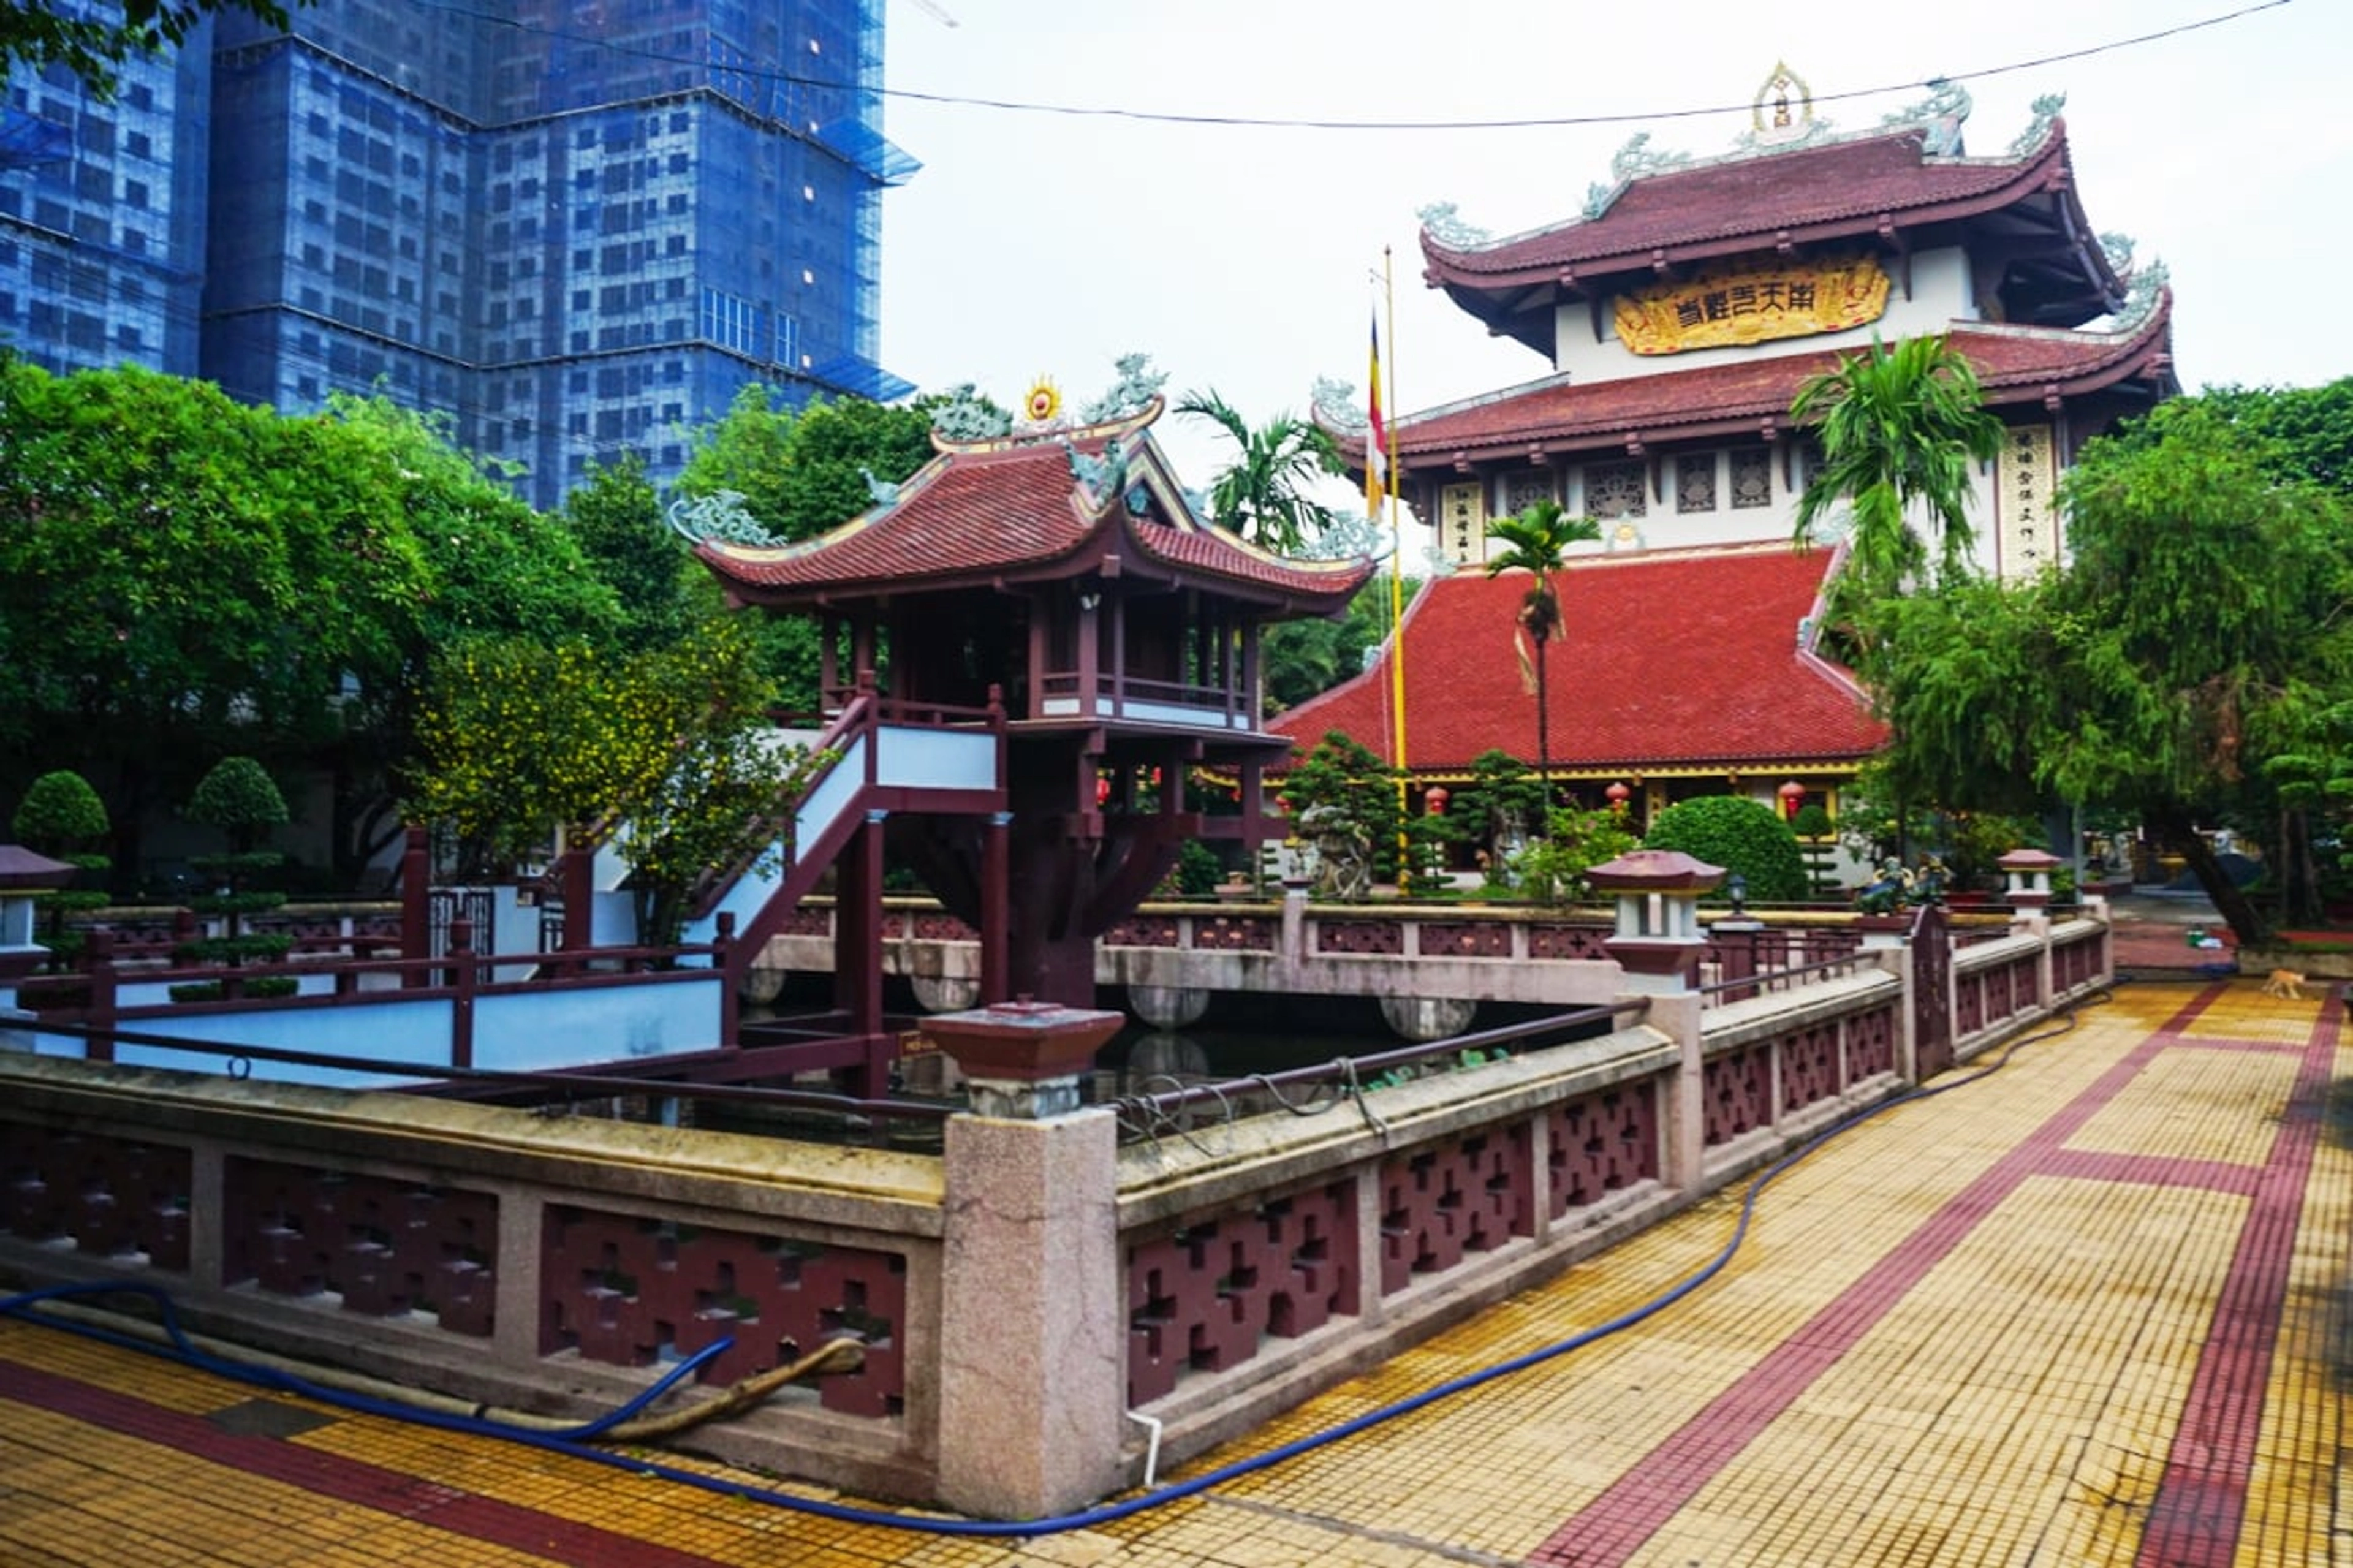  Thu Duc One Pillar Pagoda - Southern cultural highlight